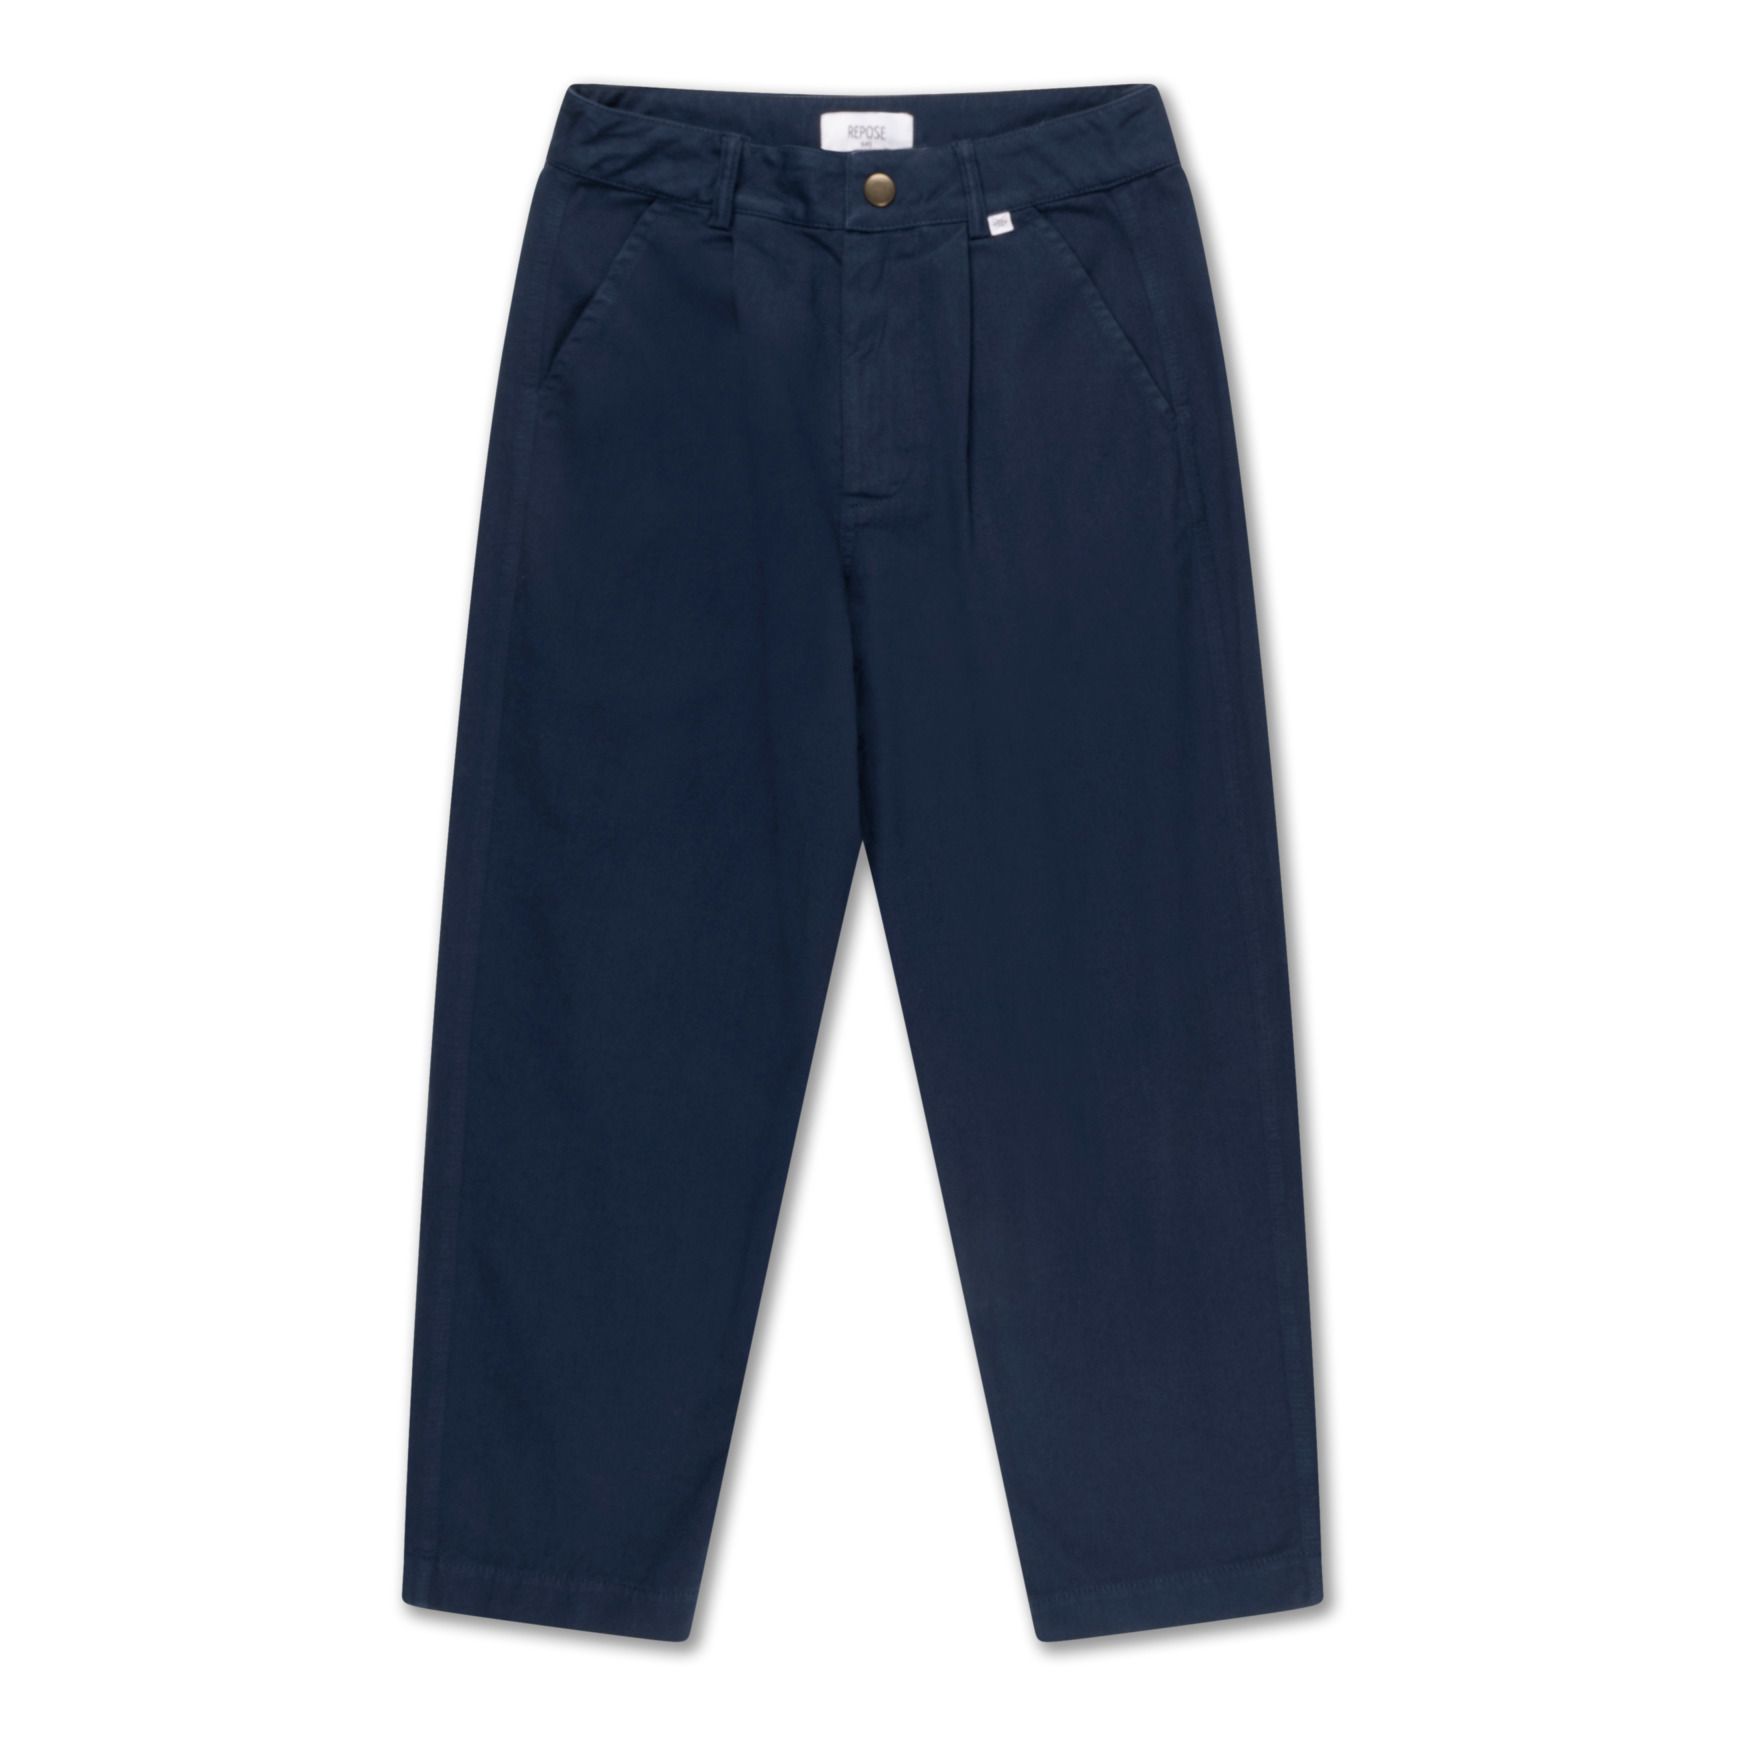 Repose AMS - Pantalon Chino - Fille - Bleu marine